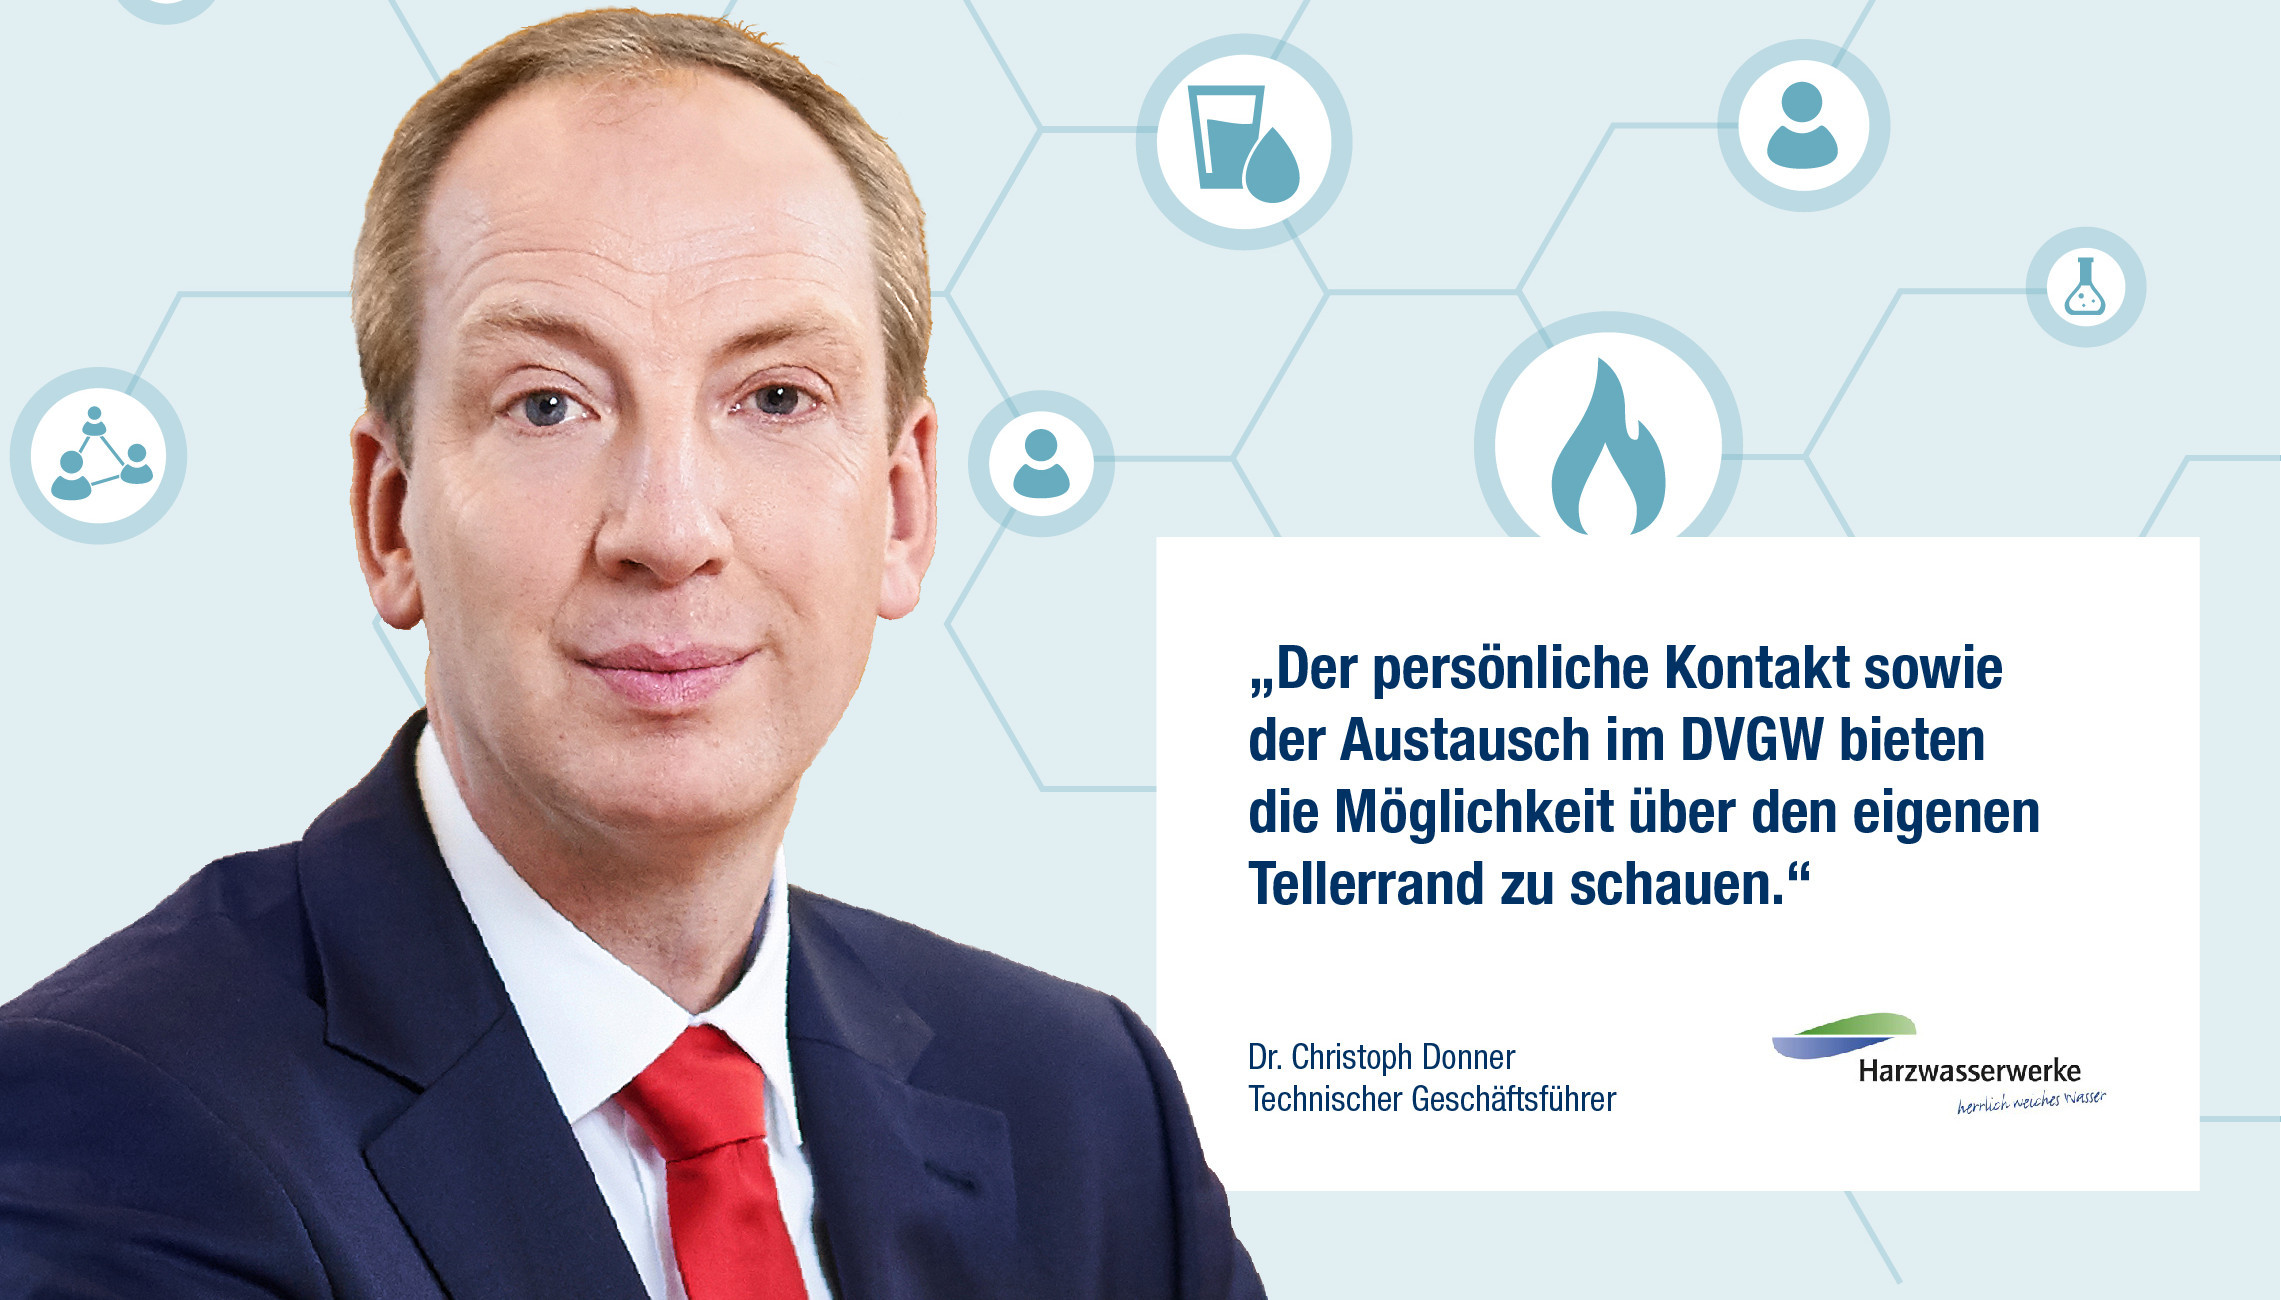 Dr. Christoph Donner, Harzwasserwerke GmbH